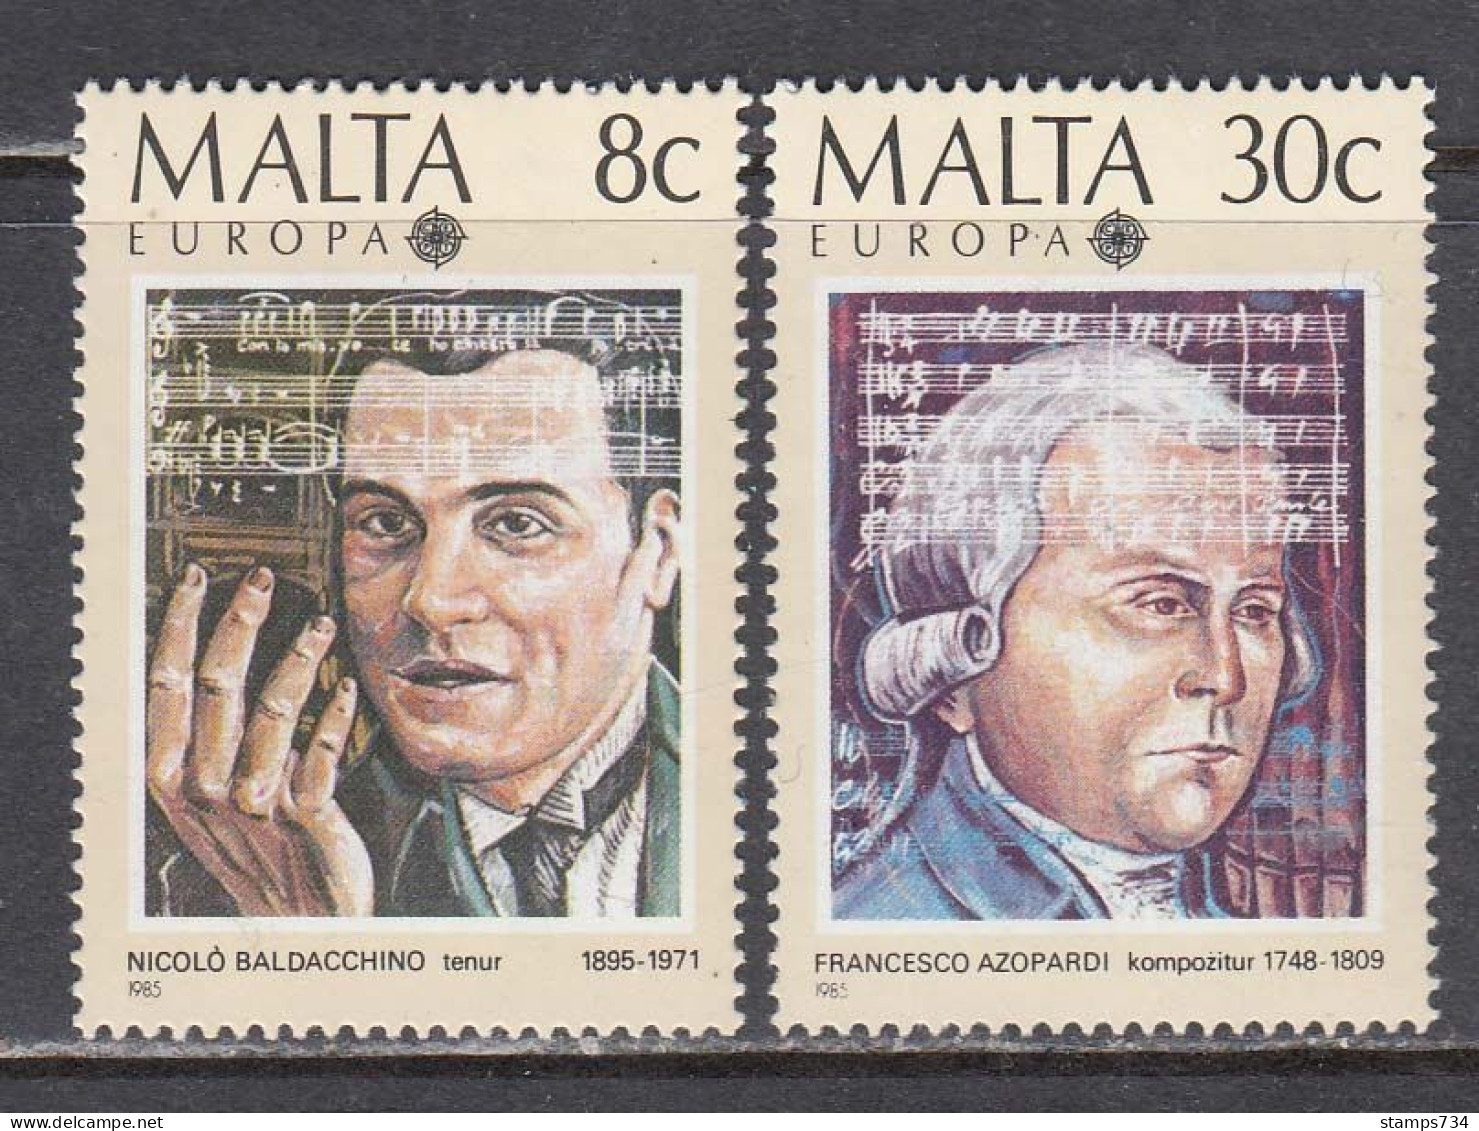 Malta 1985 - EUROPA, Mi-Nr. 726/27, MNH** - Malta